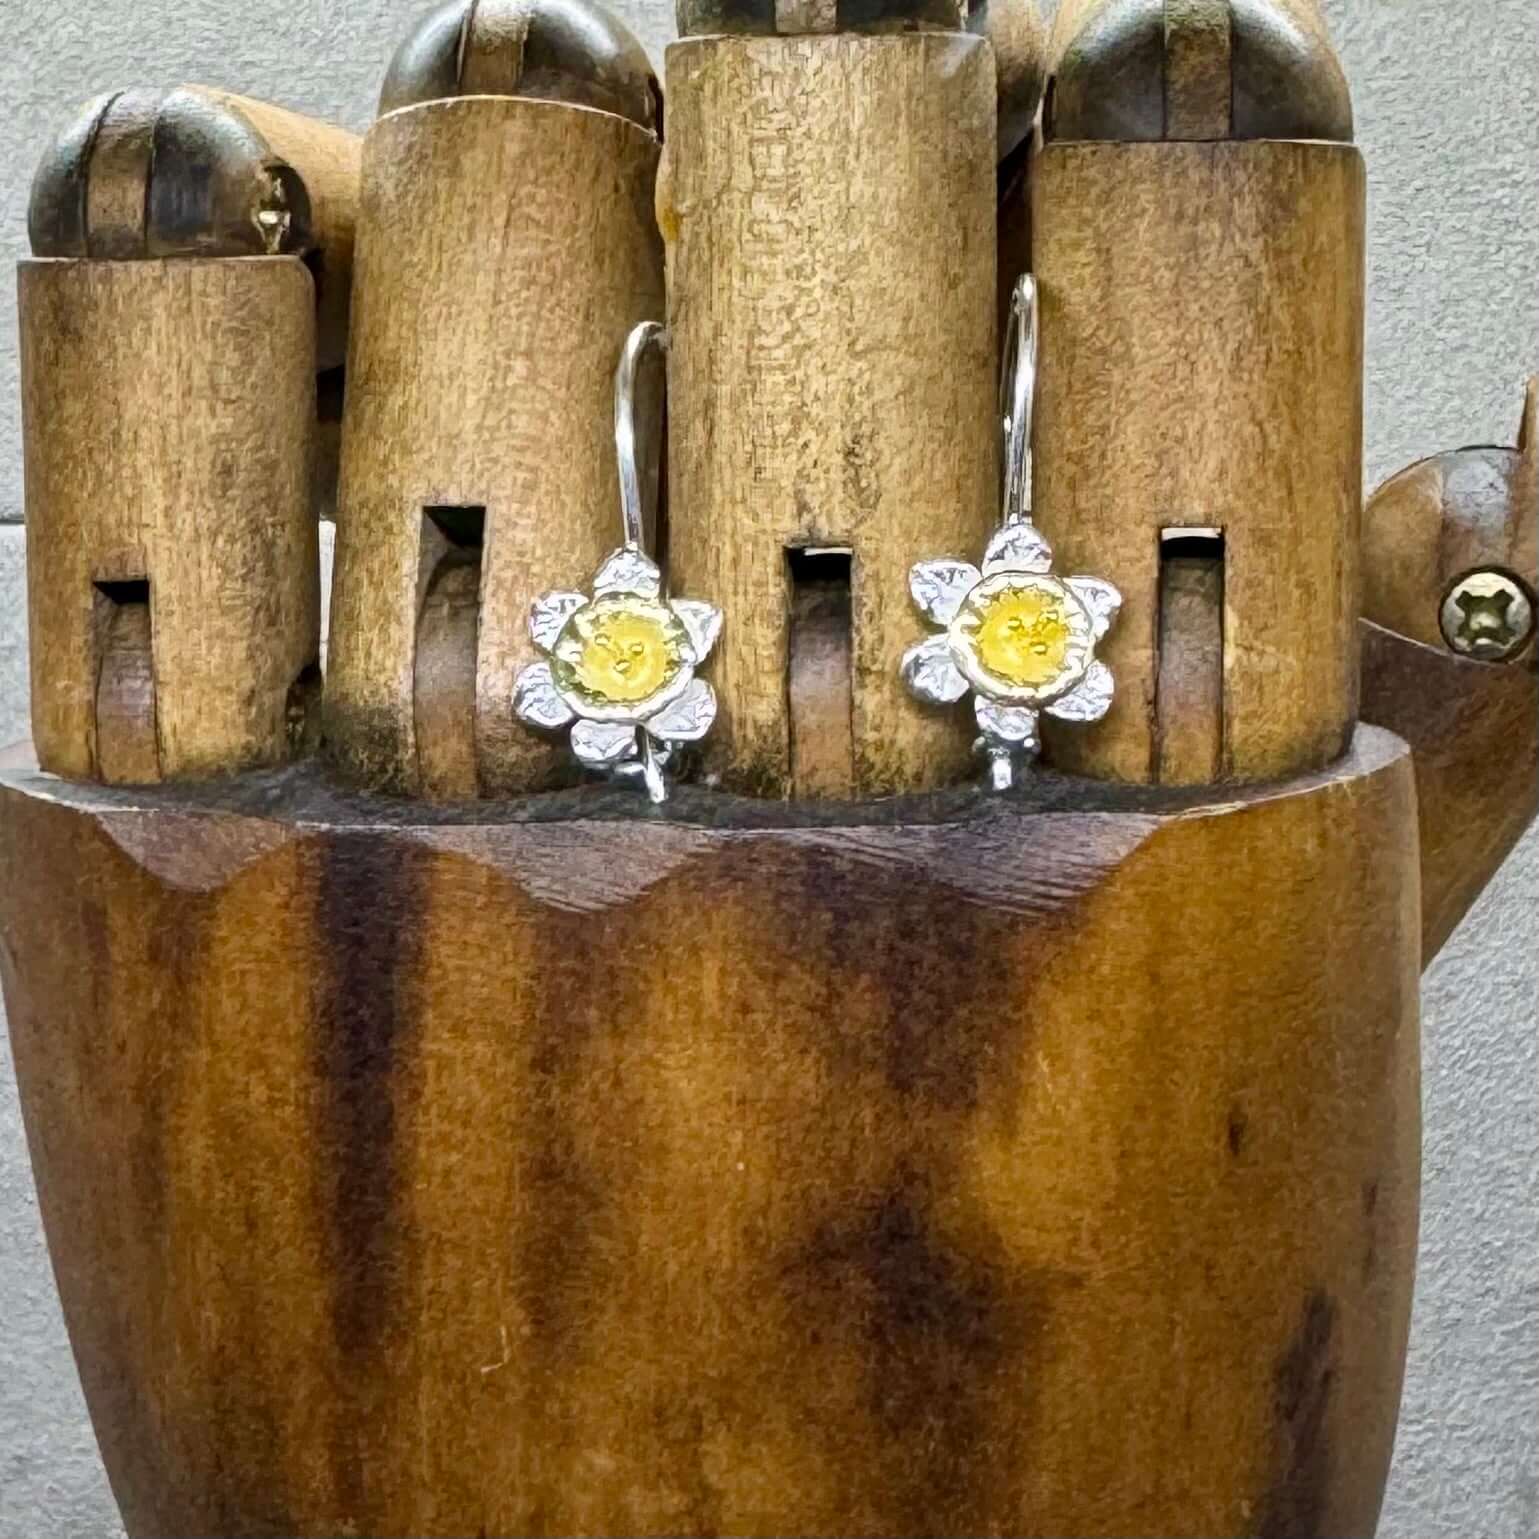 Daffodil Flower Hook Earrings & Pendant Sterling Silver Gift Set - Twelve Silver Trees